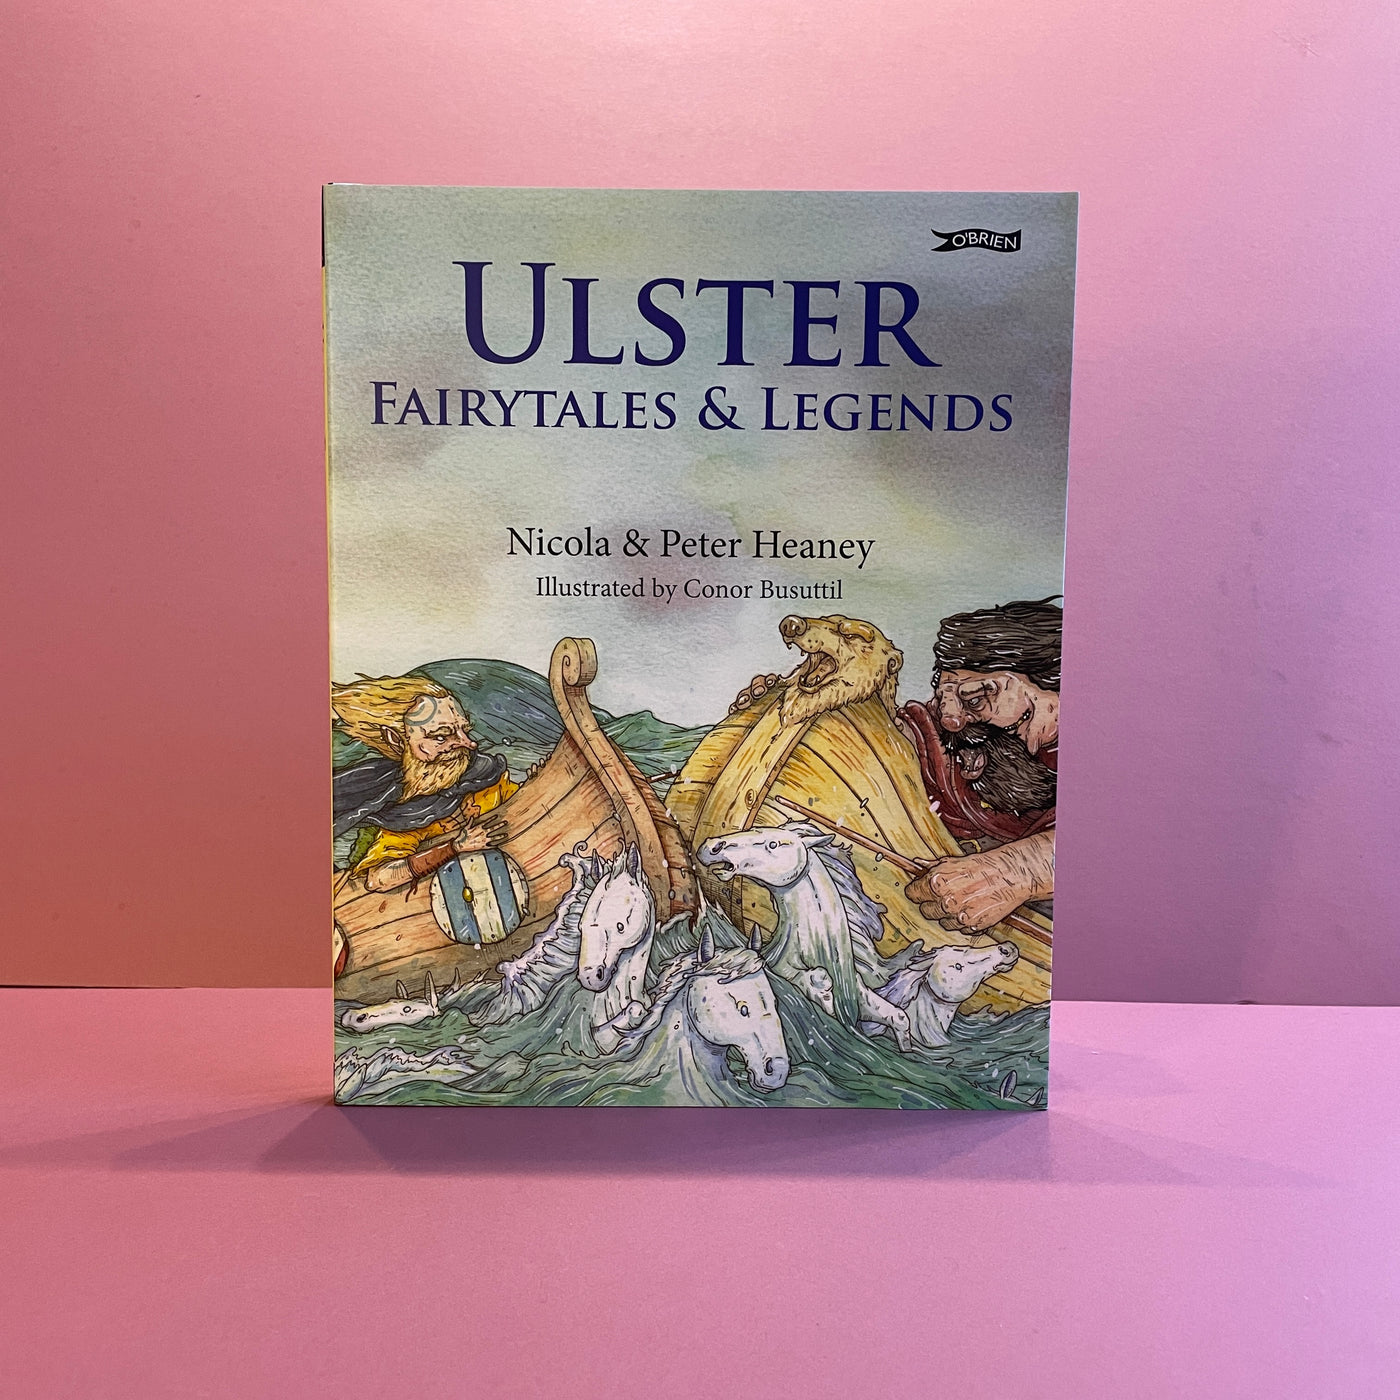 Ulster Fairytales & Legends